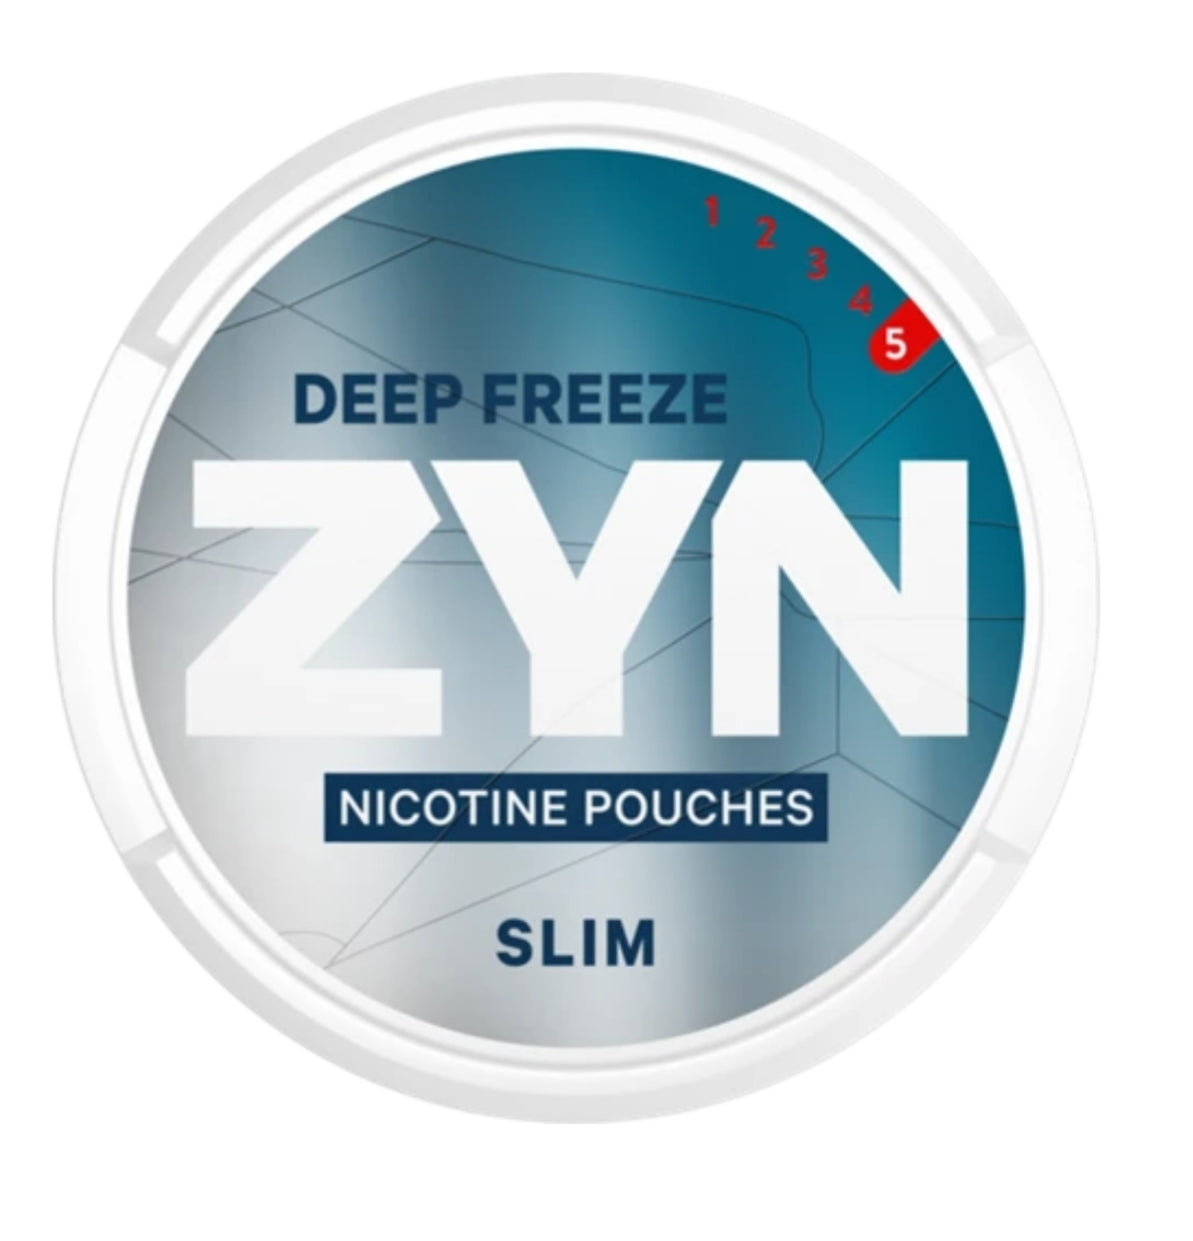 Zyn Deep Freeze